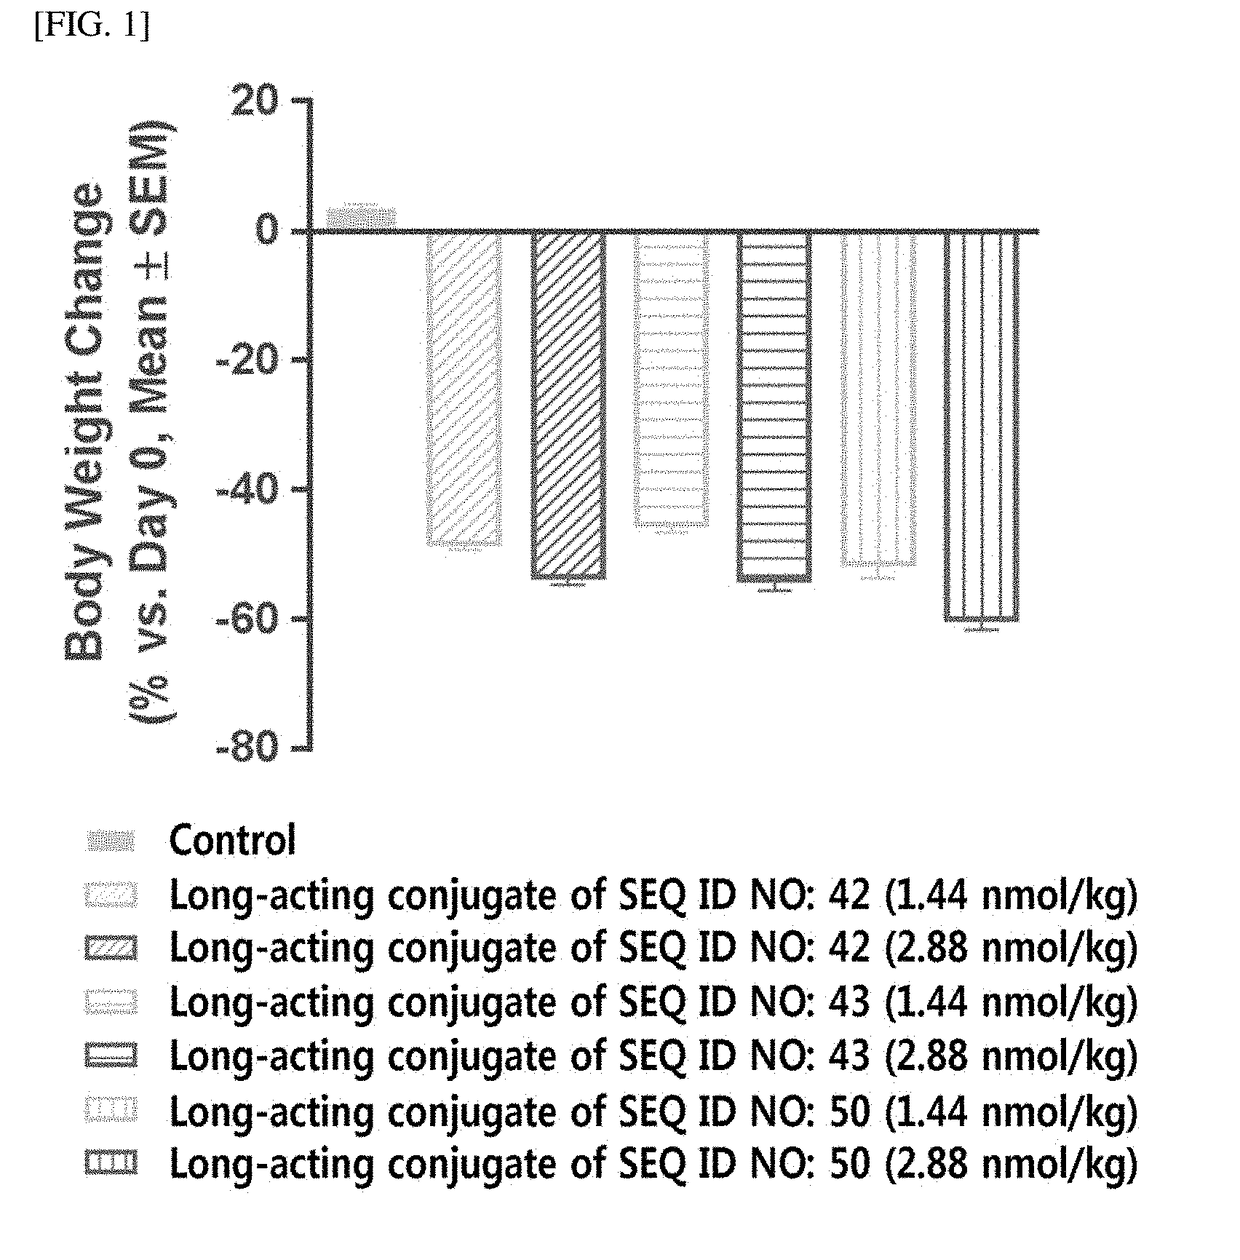 Long-acting conjugate of triple glucagon/glp-1/gip receptor agonist